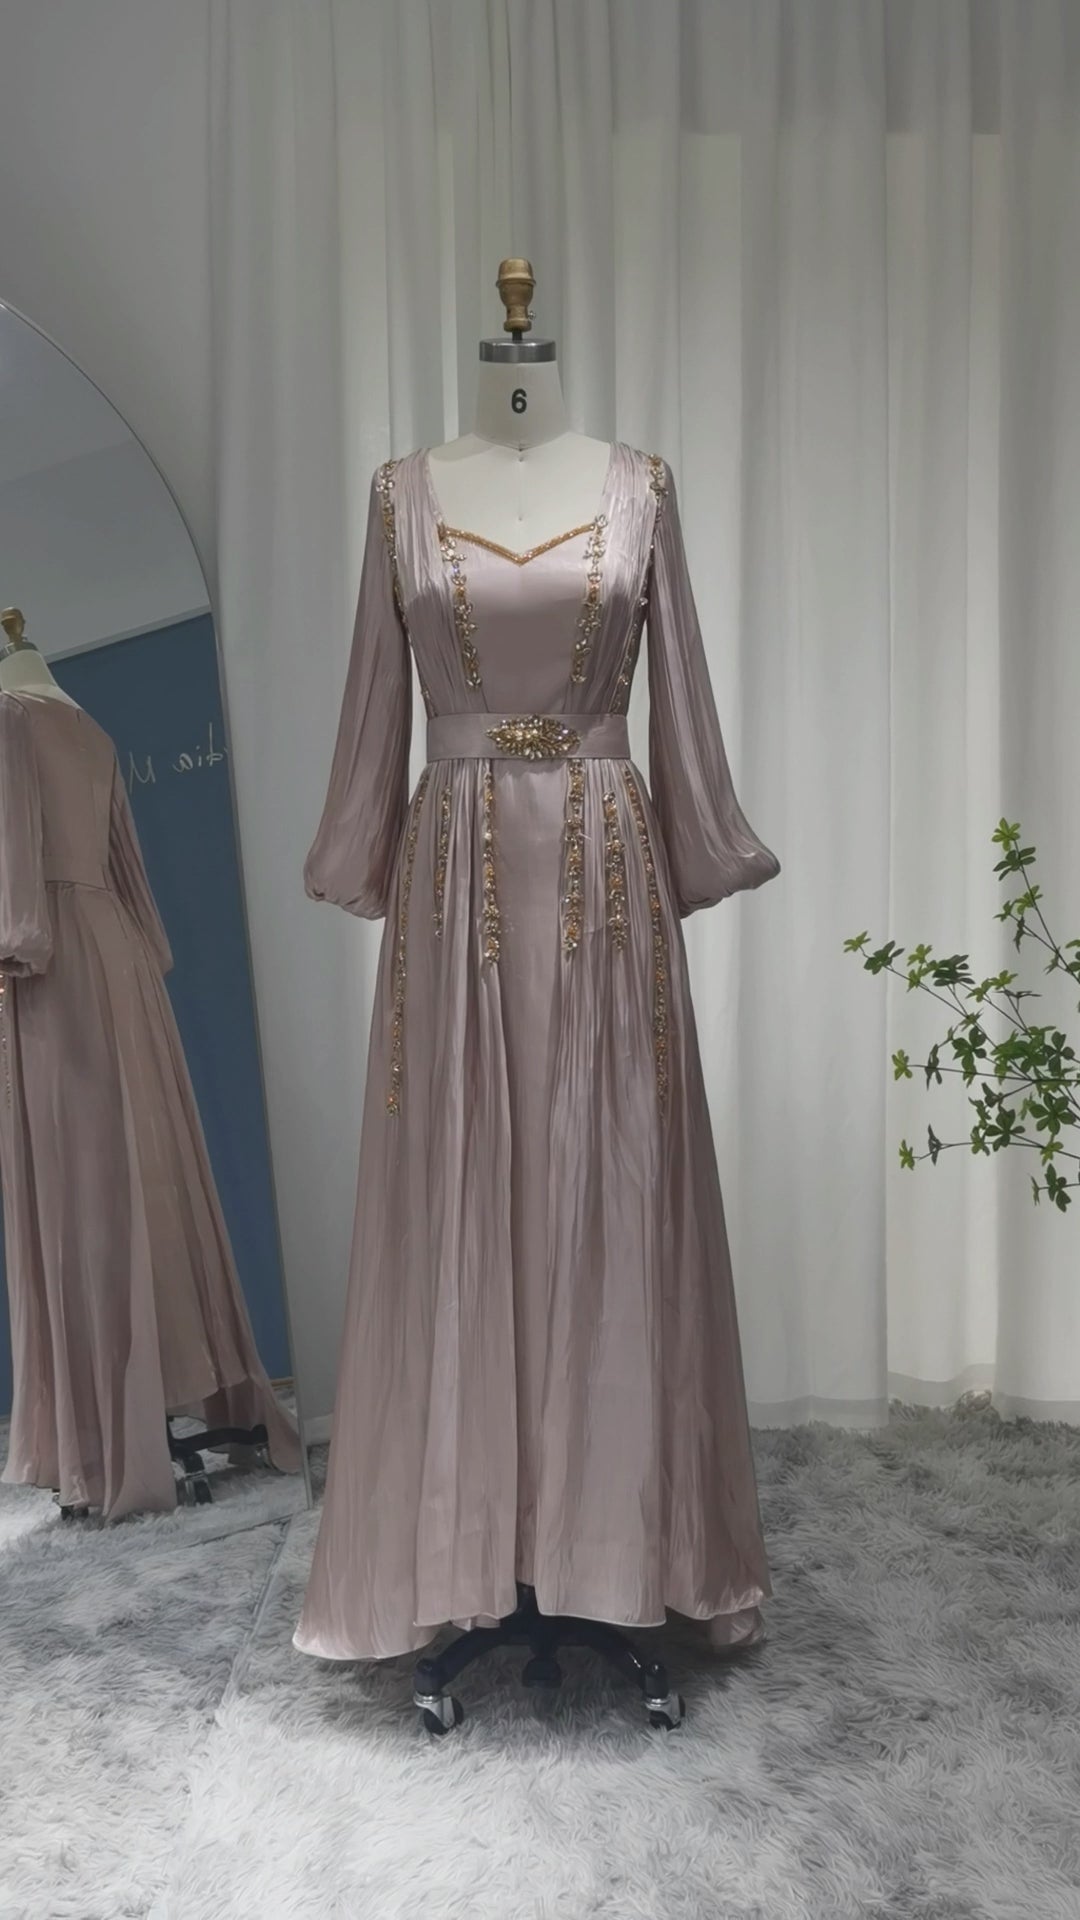 Dreamy Vow Rose Gold Moroccan Kaftan Long Sleeve Dubai Muslim Evening Dress for Women Wedding Party Arabic Engagement Formal Gowns SS441